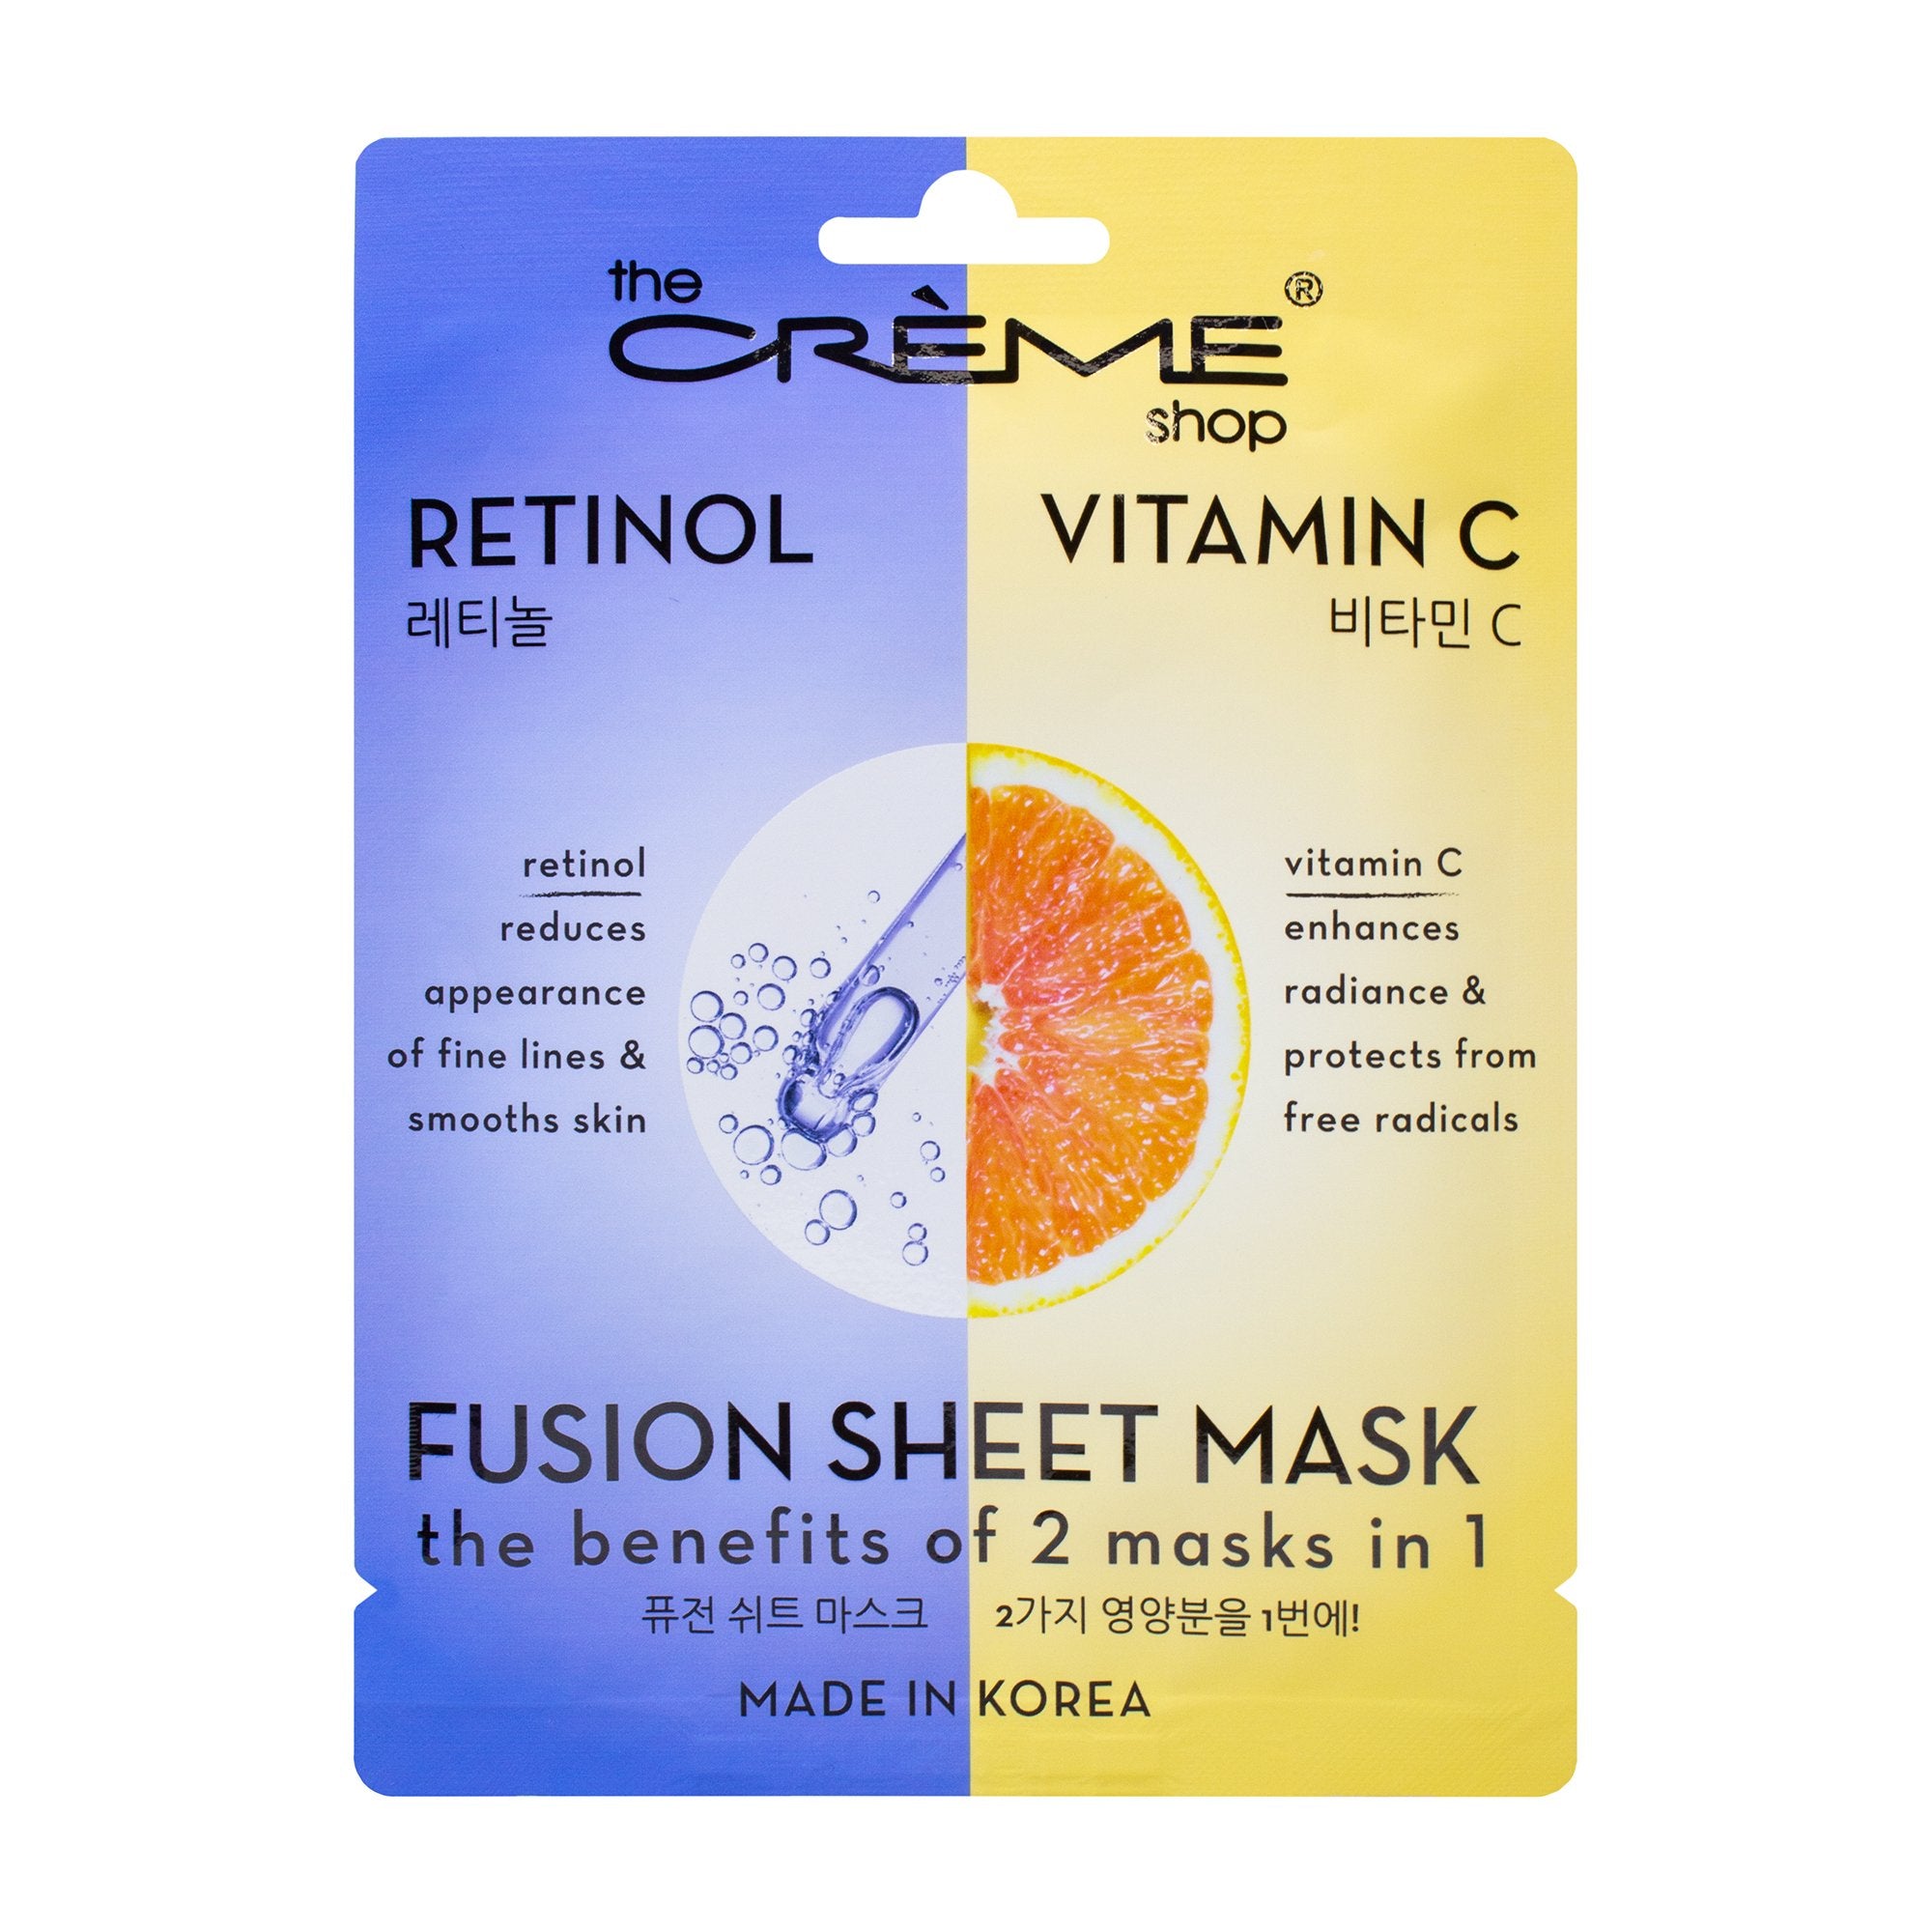 Retinol & Vitamin C Fusion Sheet Mask Fusion Sheet Masks The Crème Shop 